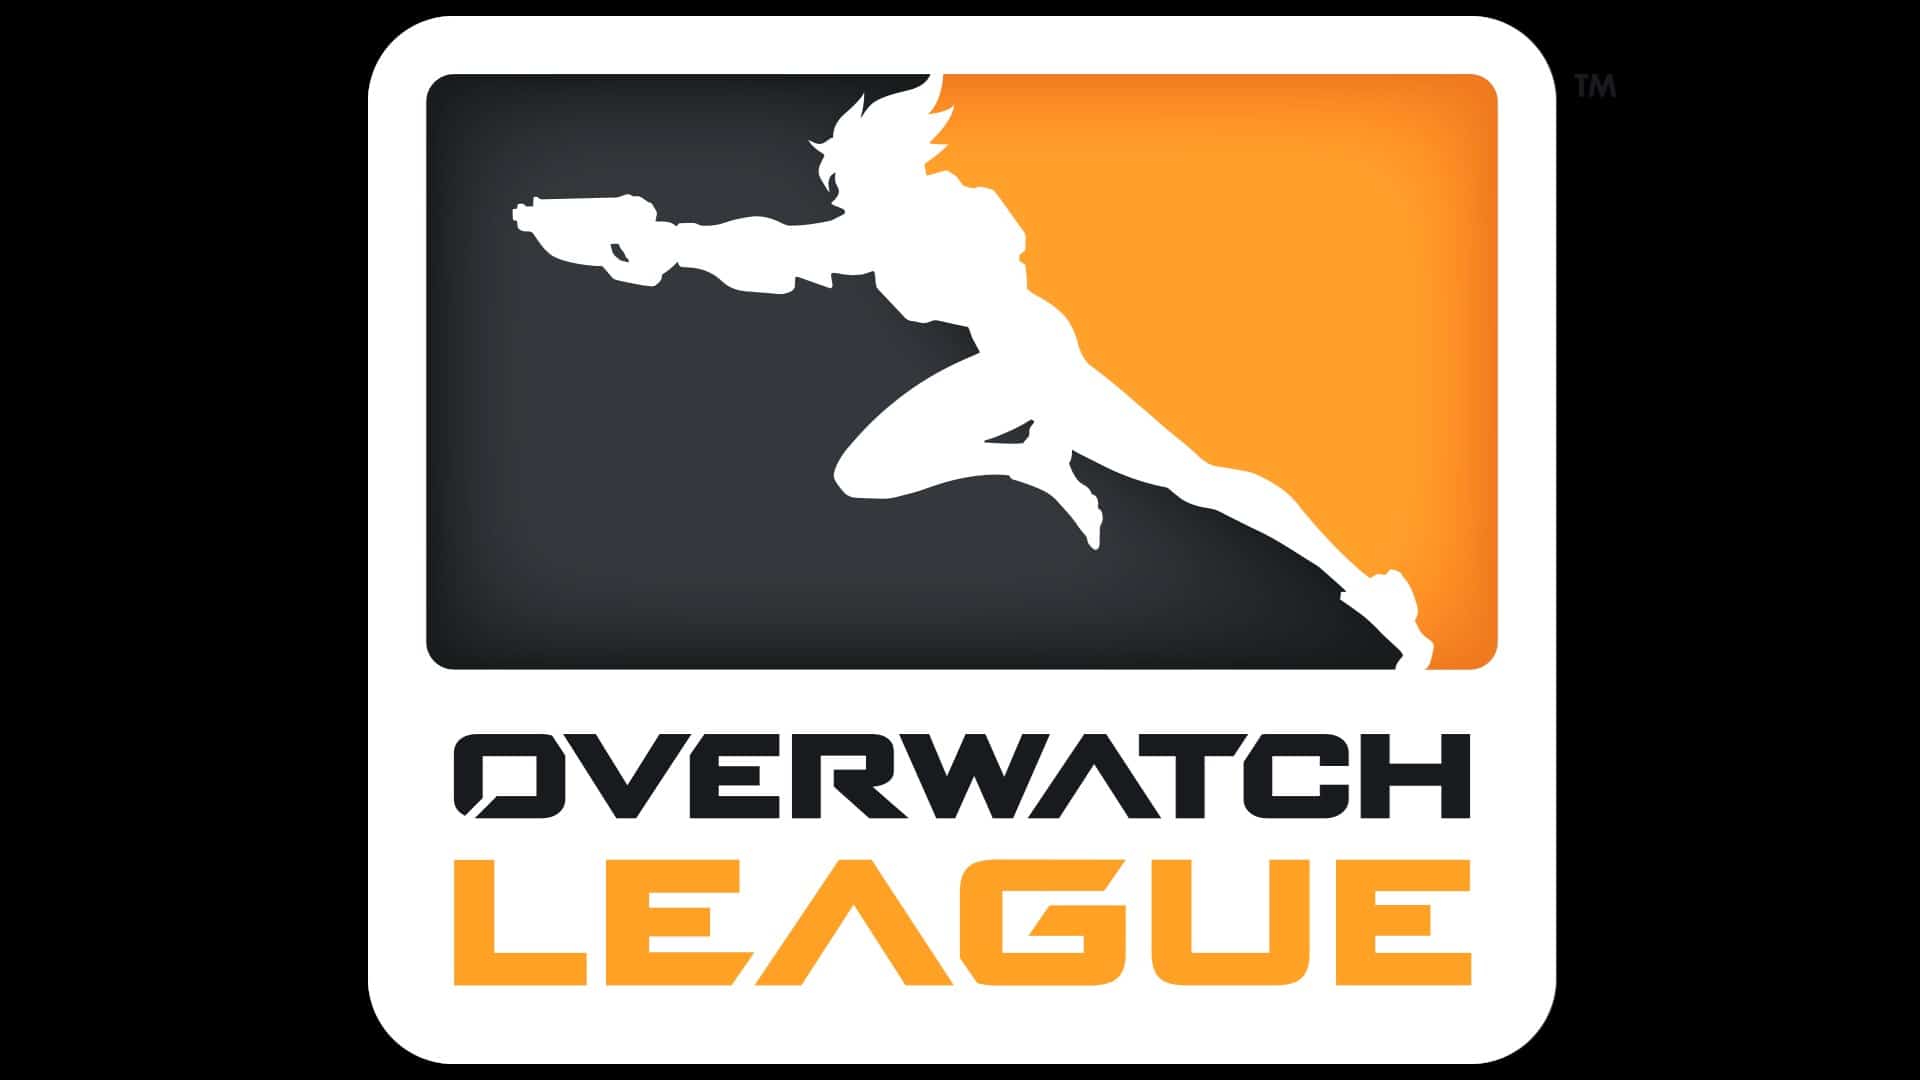 Overwatch League Blizzard - Nate Nanzer va a Epic Games